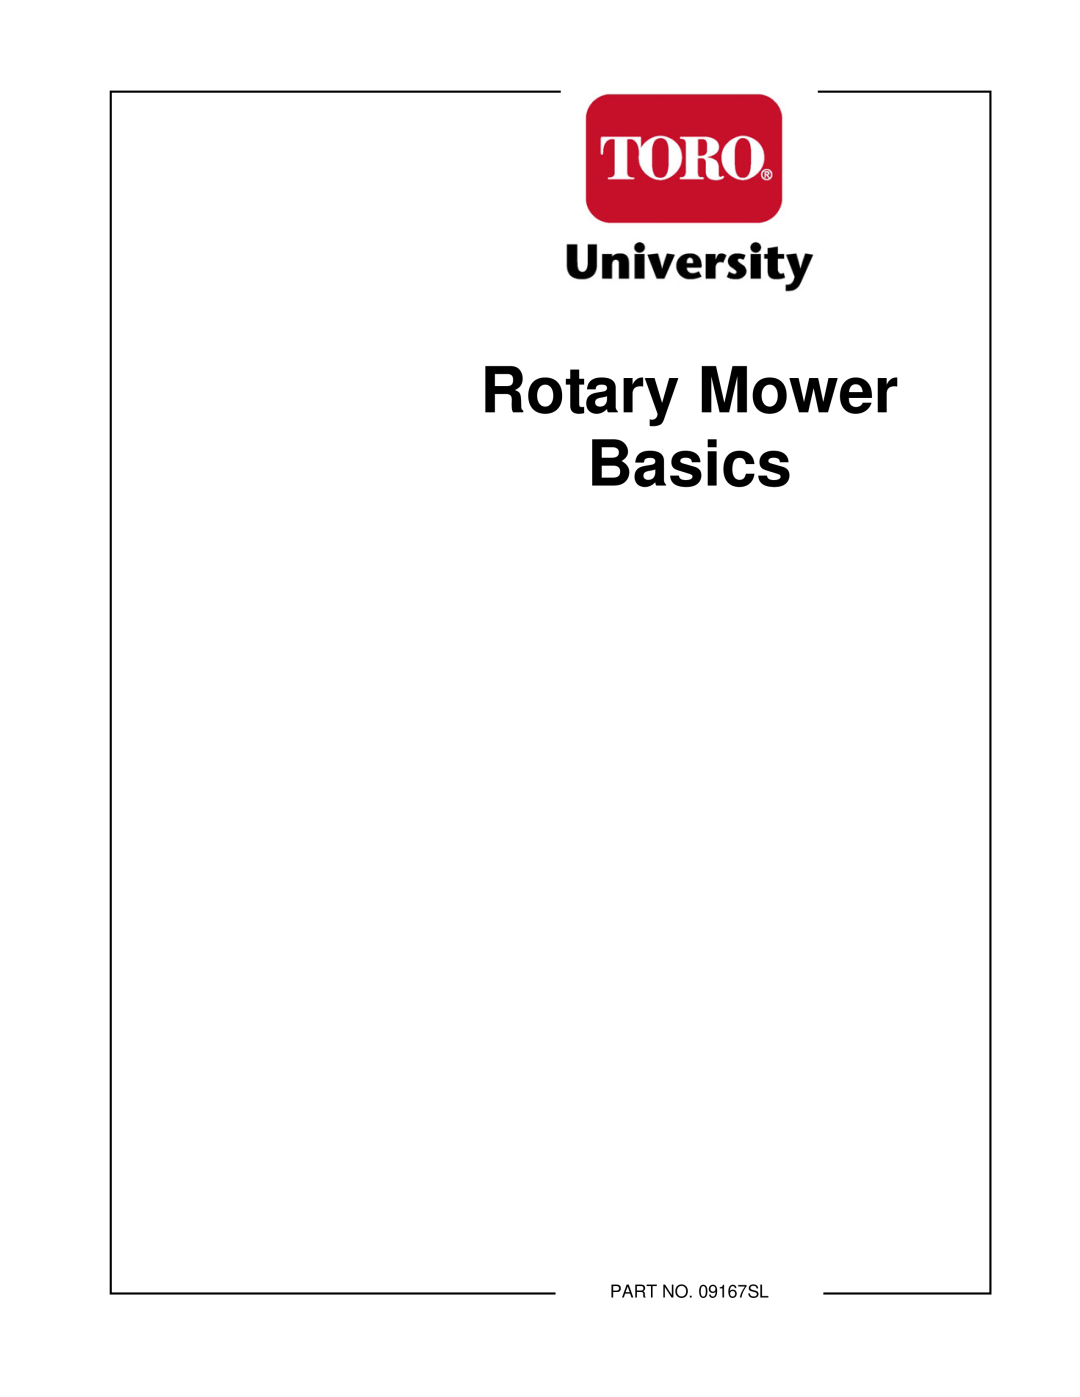 Toro manual Rotary Mower Basics, PART NO. 09167SL 